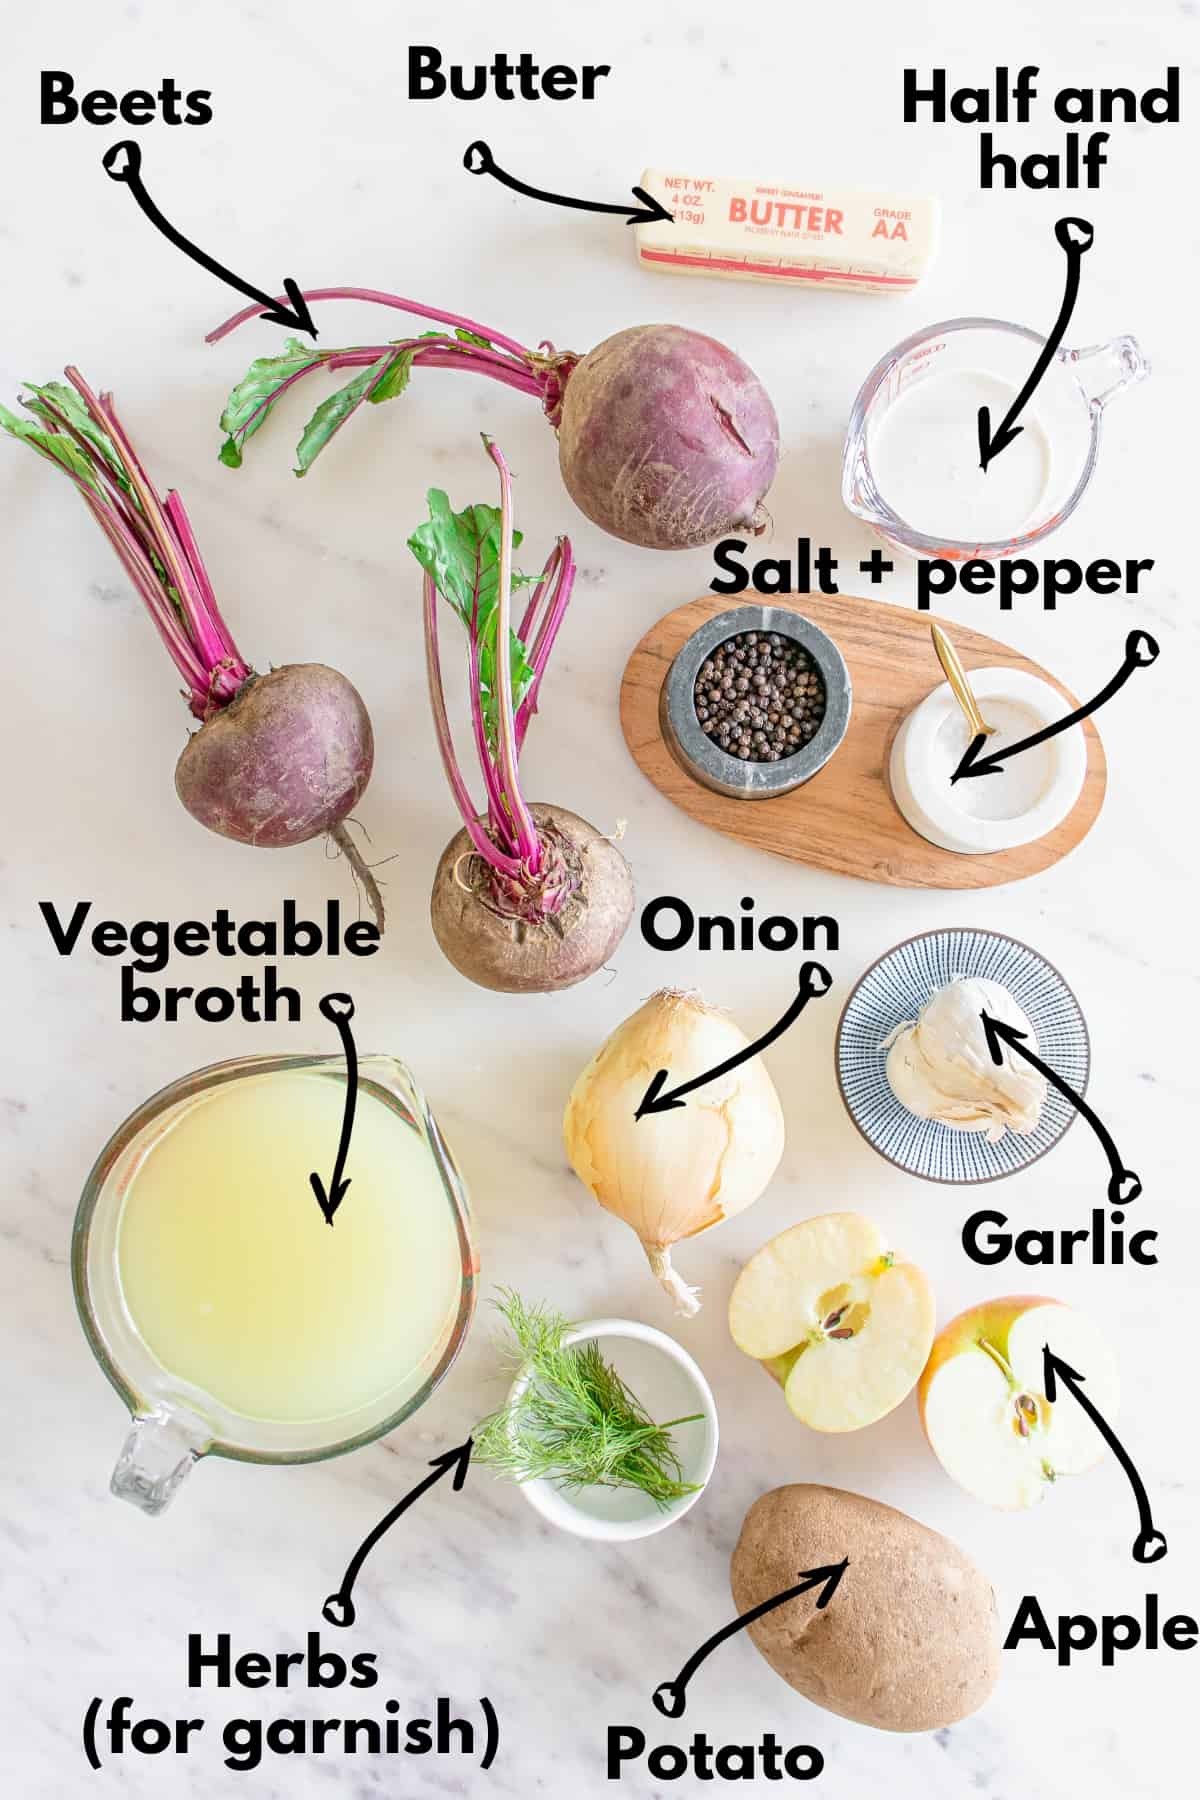 Beets, apple, broth, butter, half and half, onion, garlic, potato, salt, pepper, and herbs.